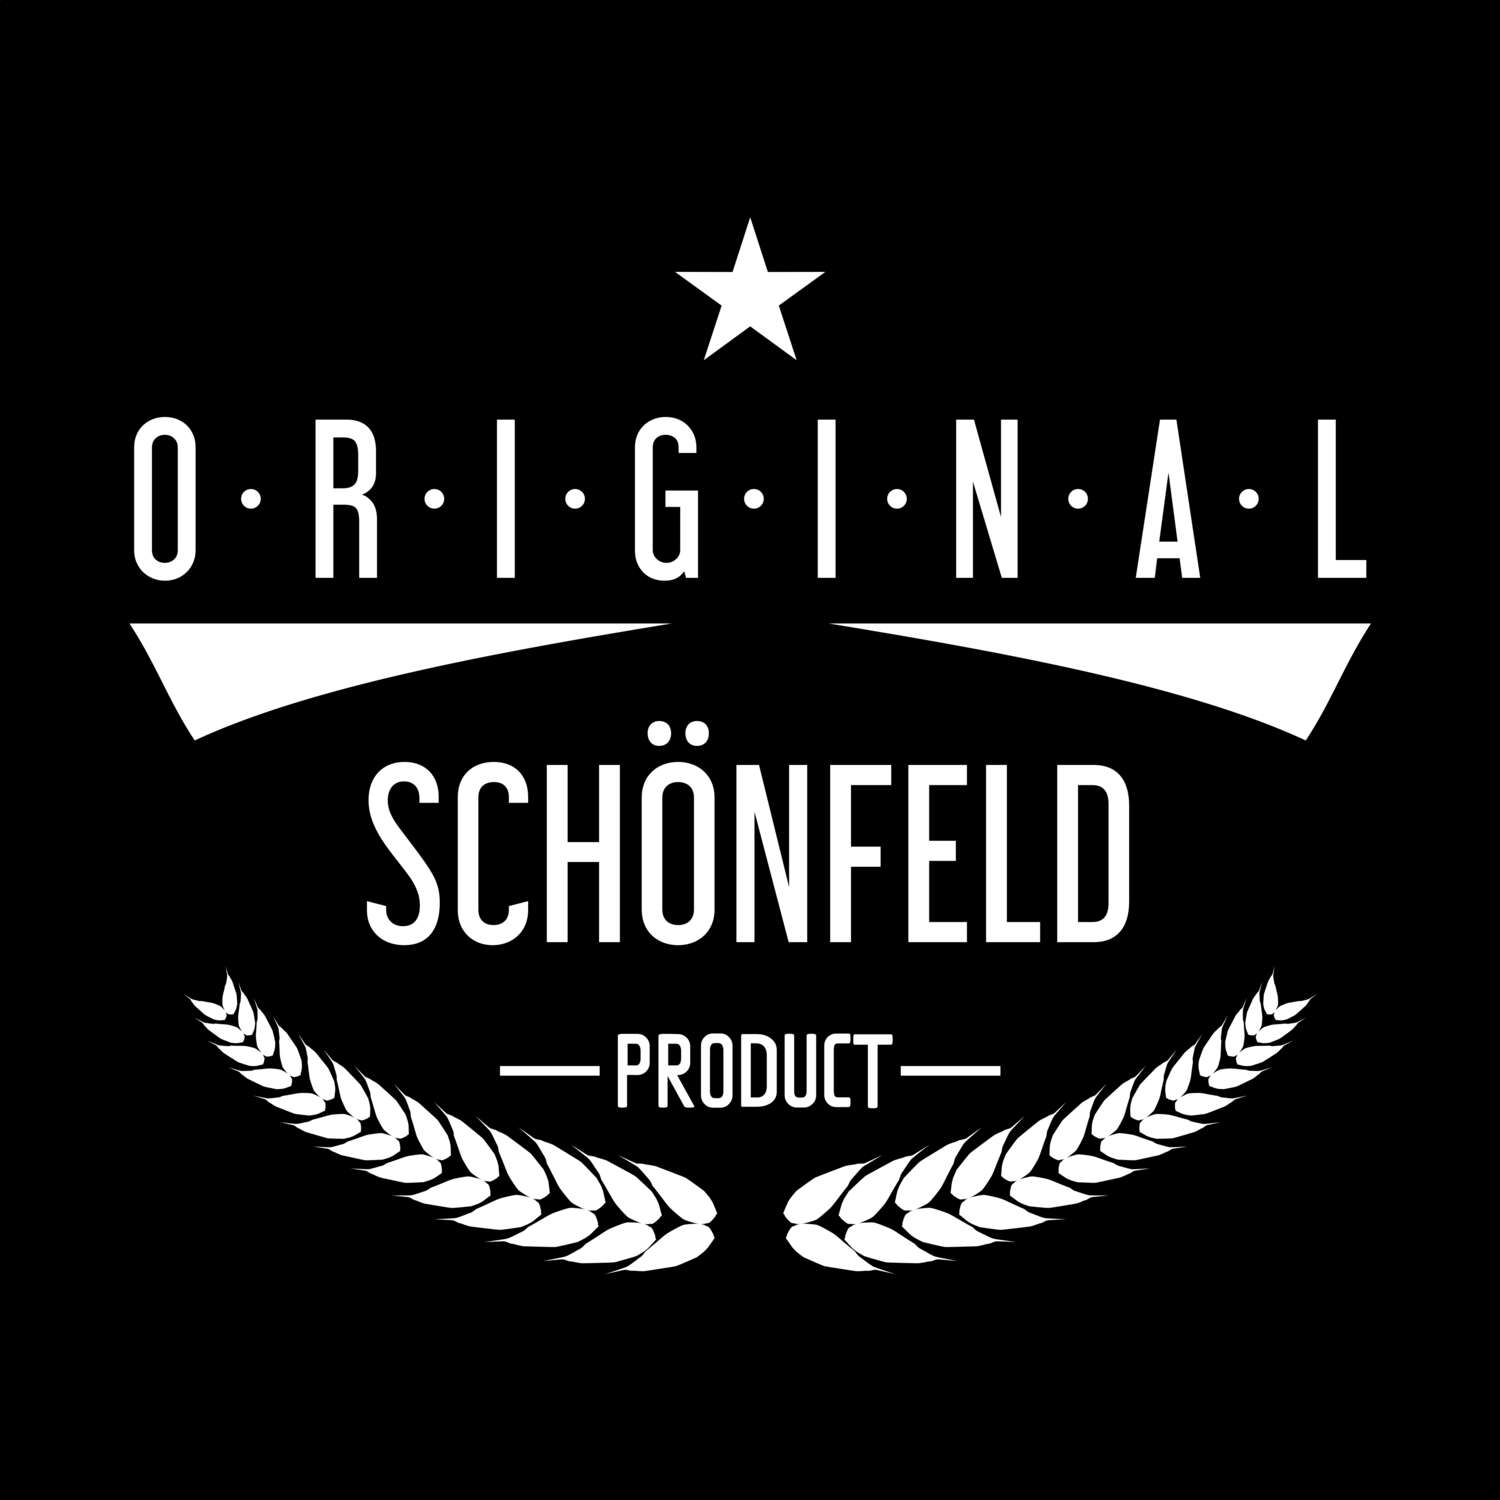 Schönfeld T-Shirt »Original Product«